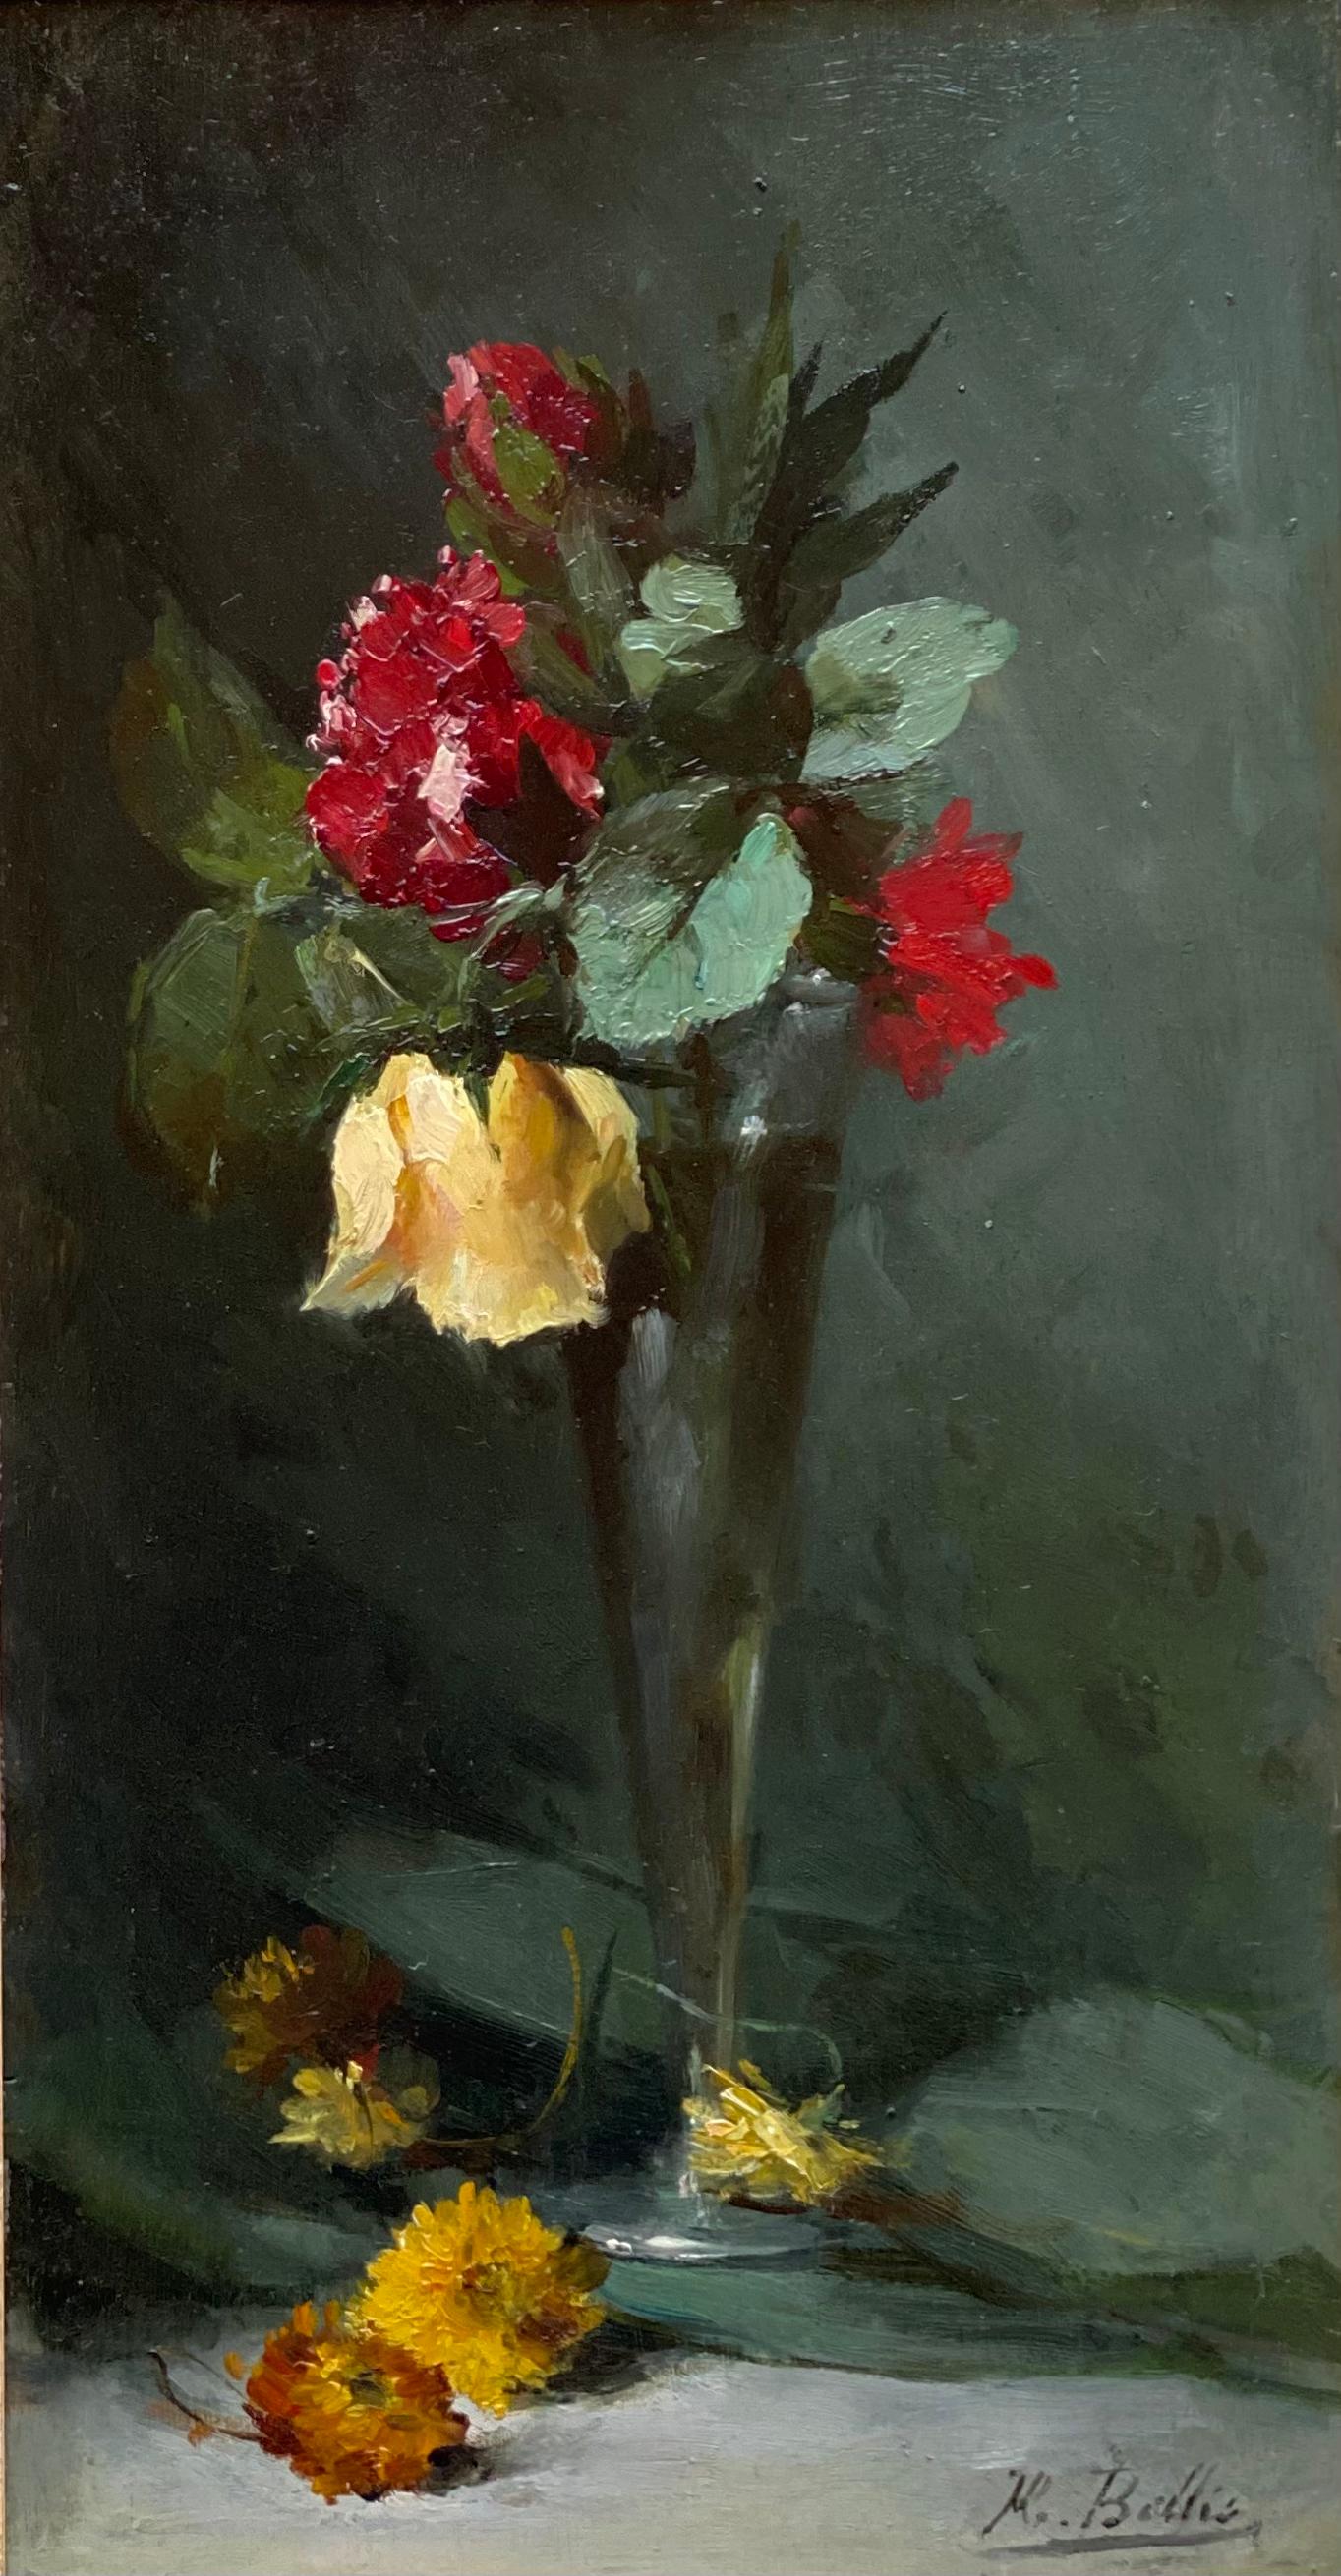   Hubert Bellis, Brussels 1831 – 1902, Belgian Painter, 'Red and Yellow Roses' - Painting by HUBERT BELLIS